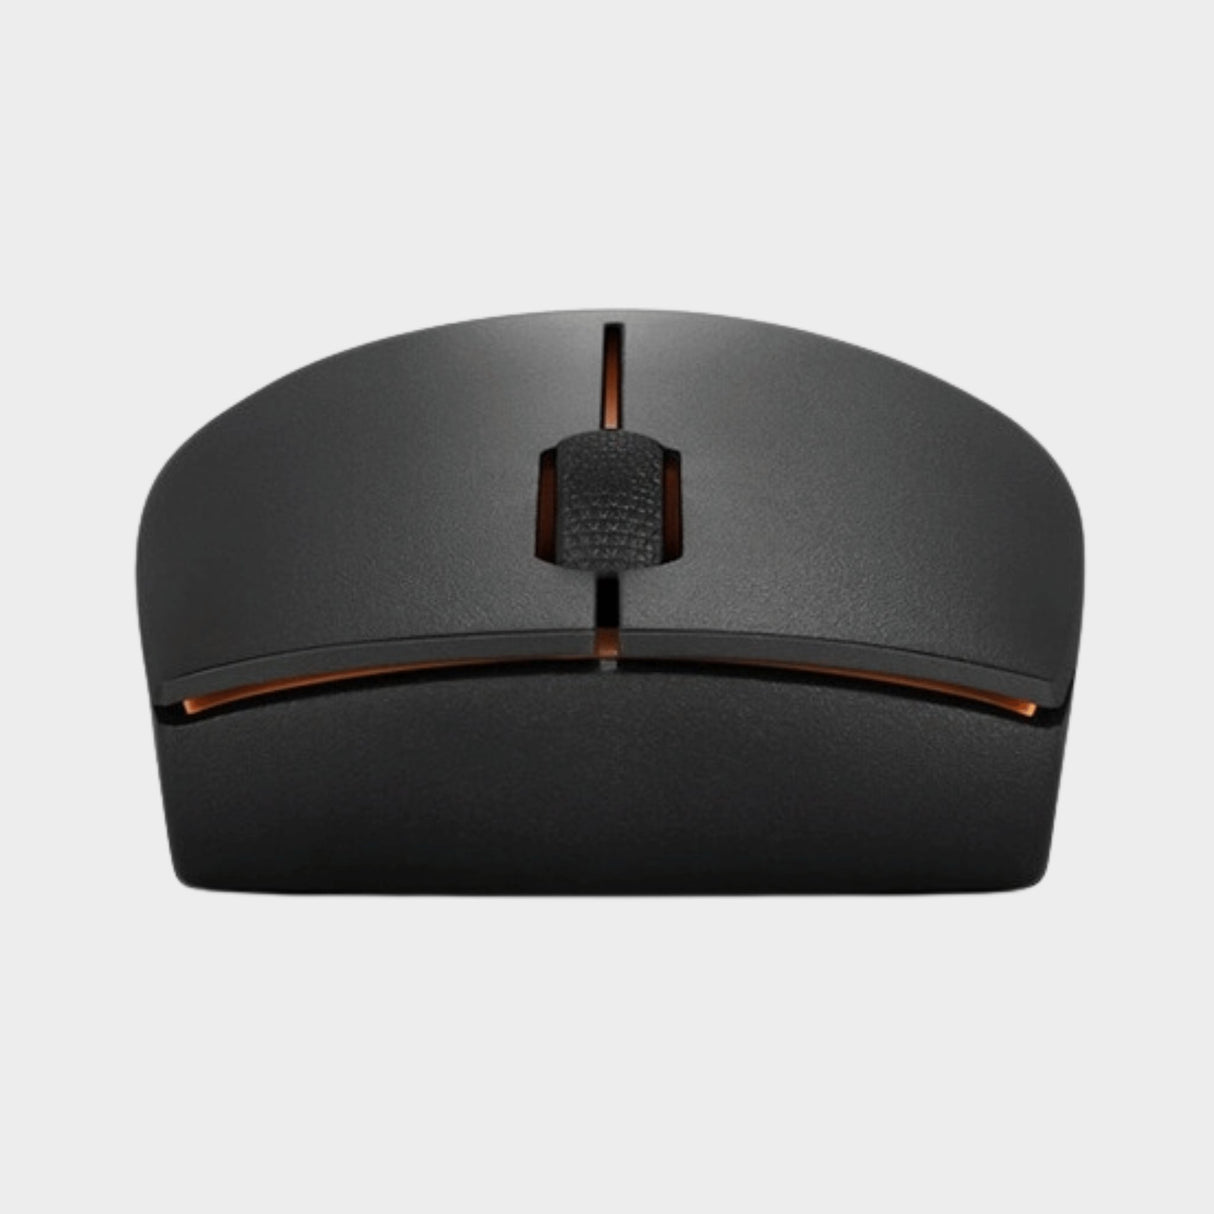 Lenovo 300 Wireless Compact Mouse, Black - KWT Tech Mart